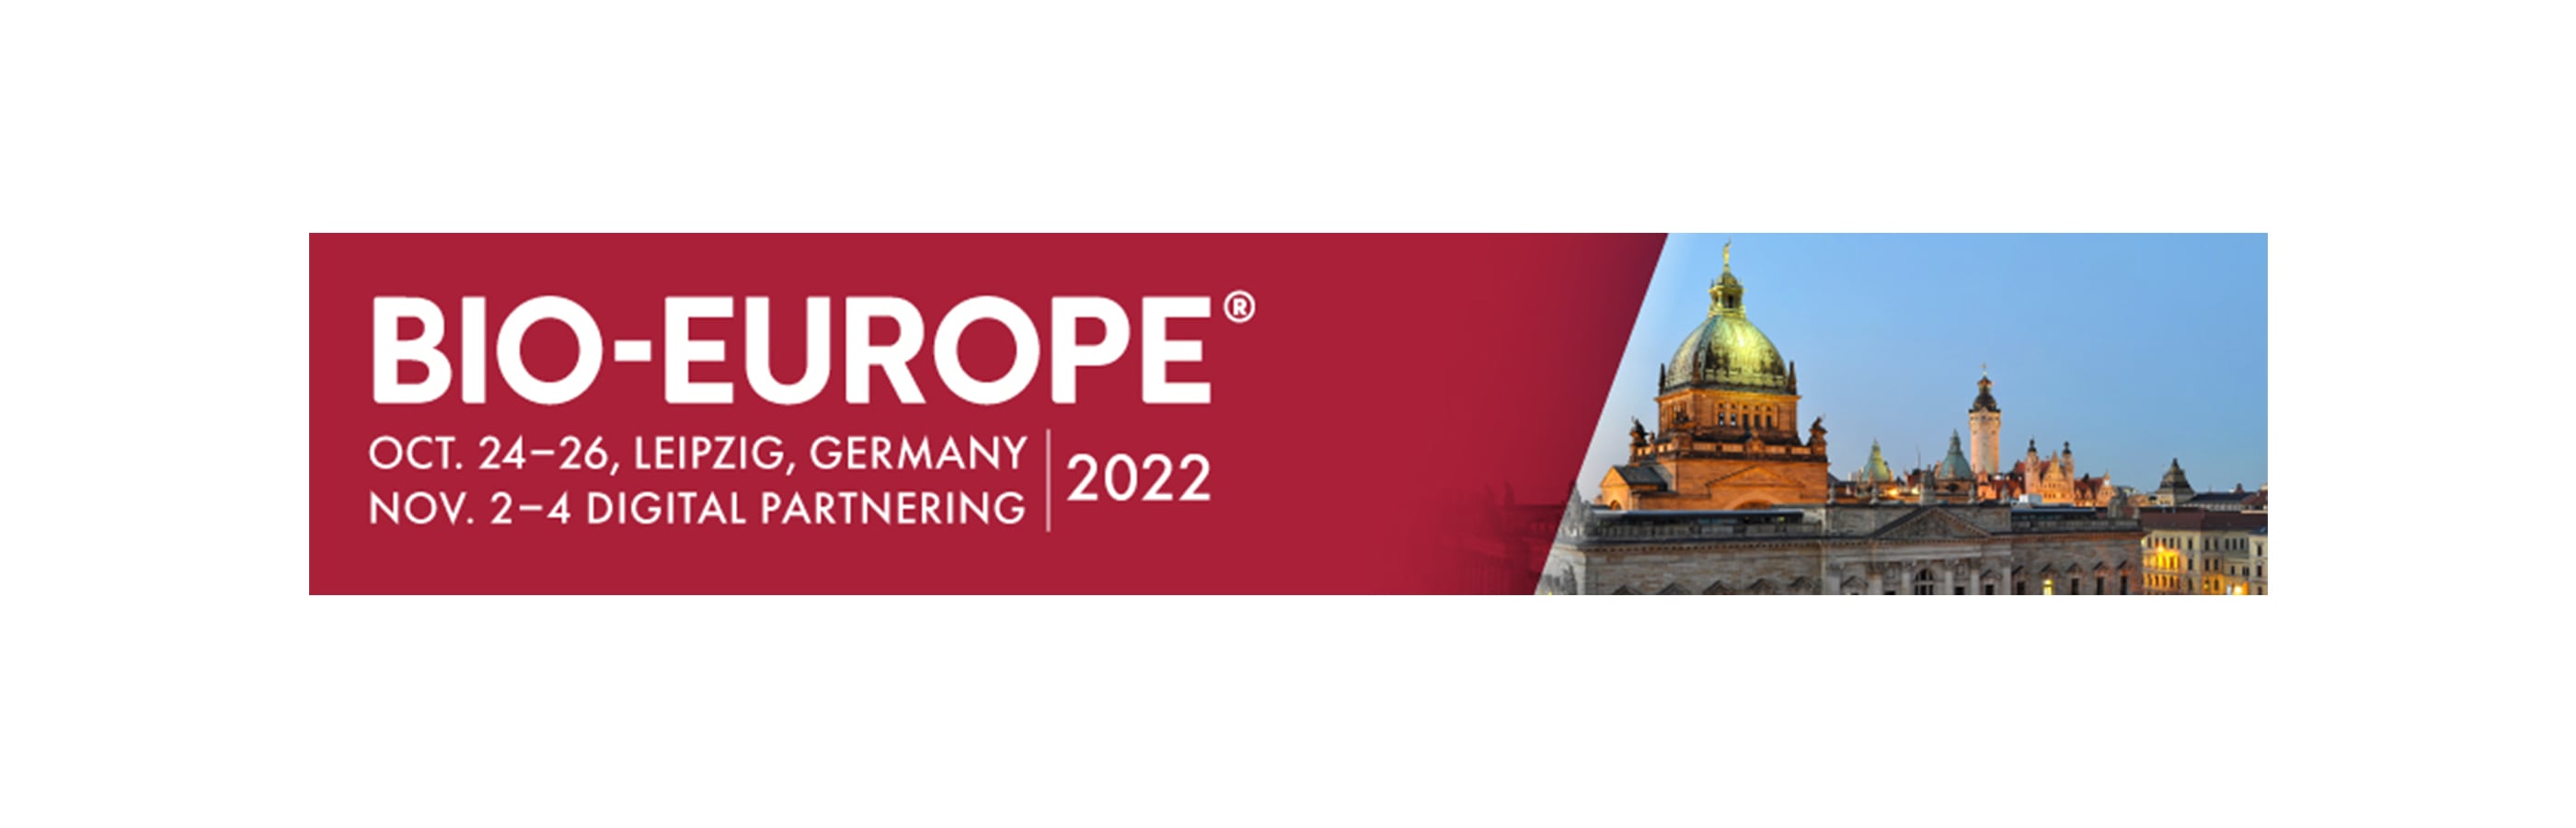 Bio-Europe 2022 Leipzig